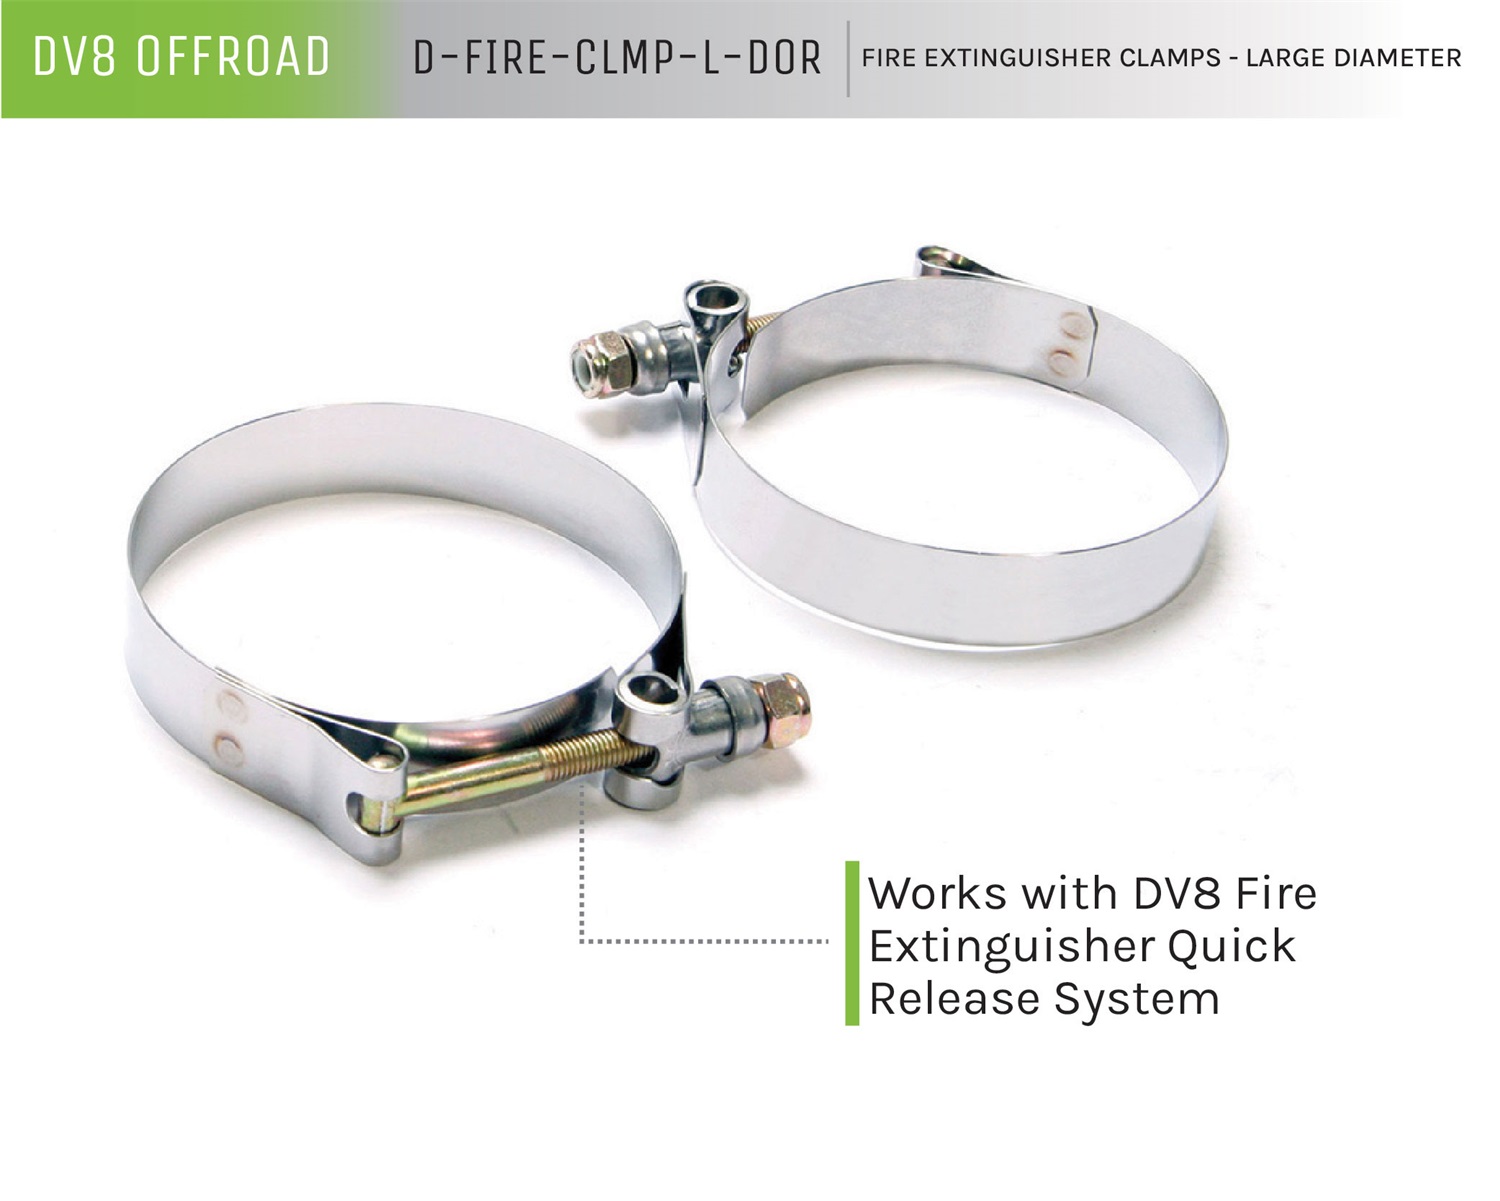 DV8 Offroad D-FIRE-CLMP-L-DOR Fire Extinguisher Clamps